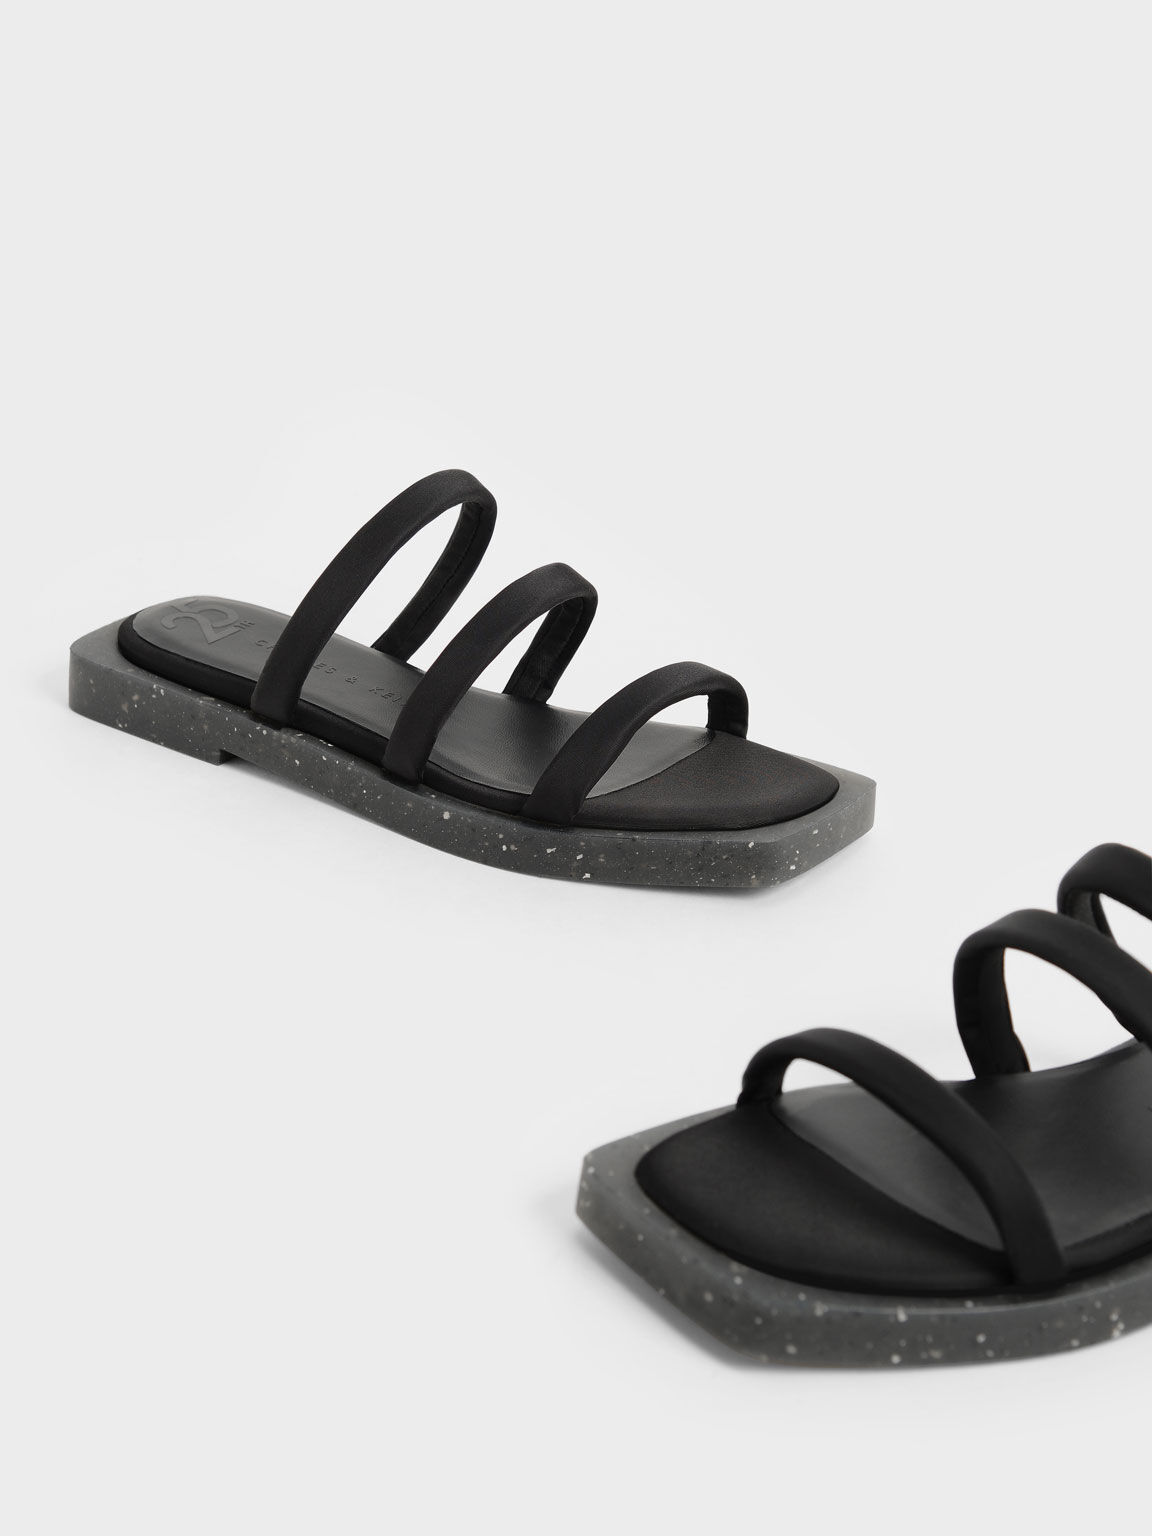 The Anniversary Series: Sandal Slide Arabella Recycled Nylon, Black, hi-res